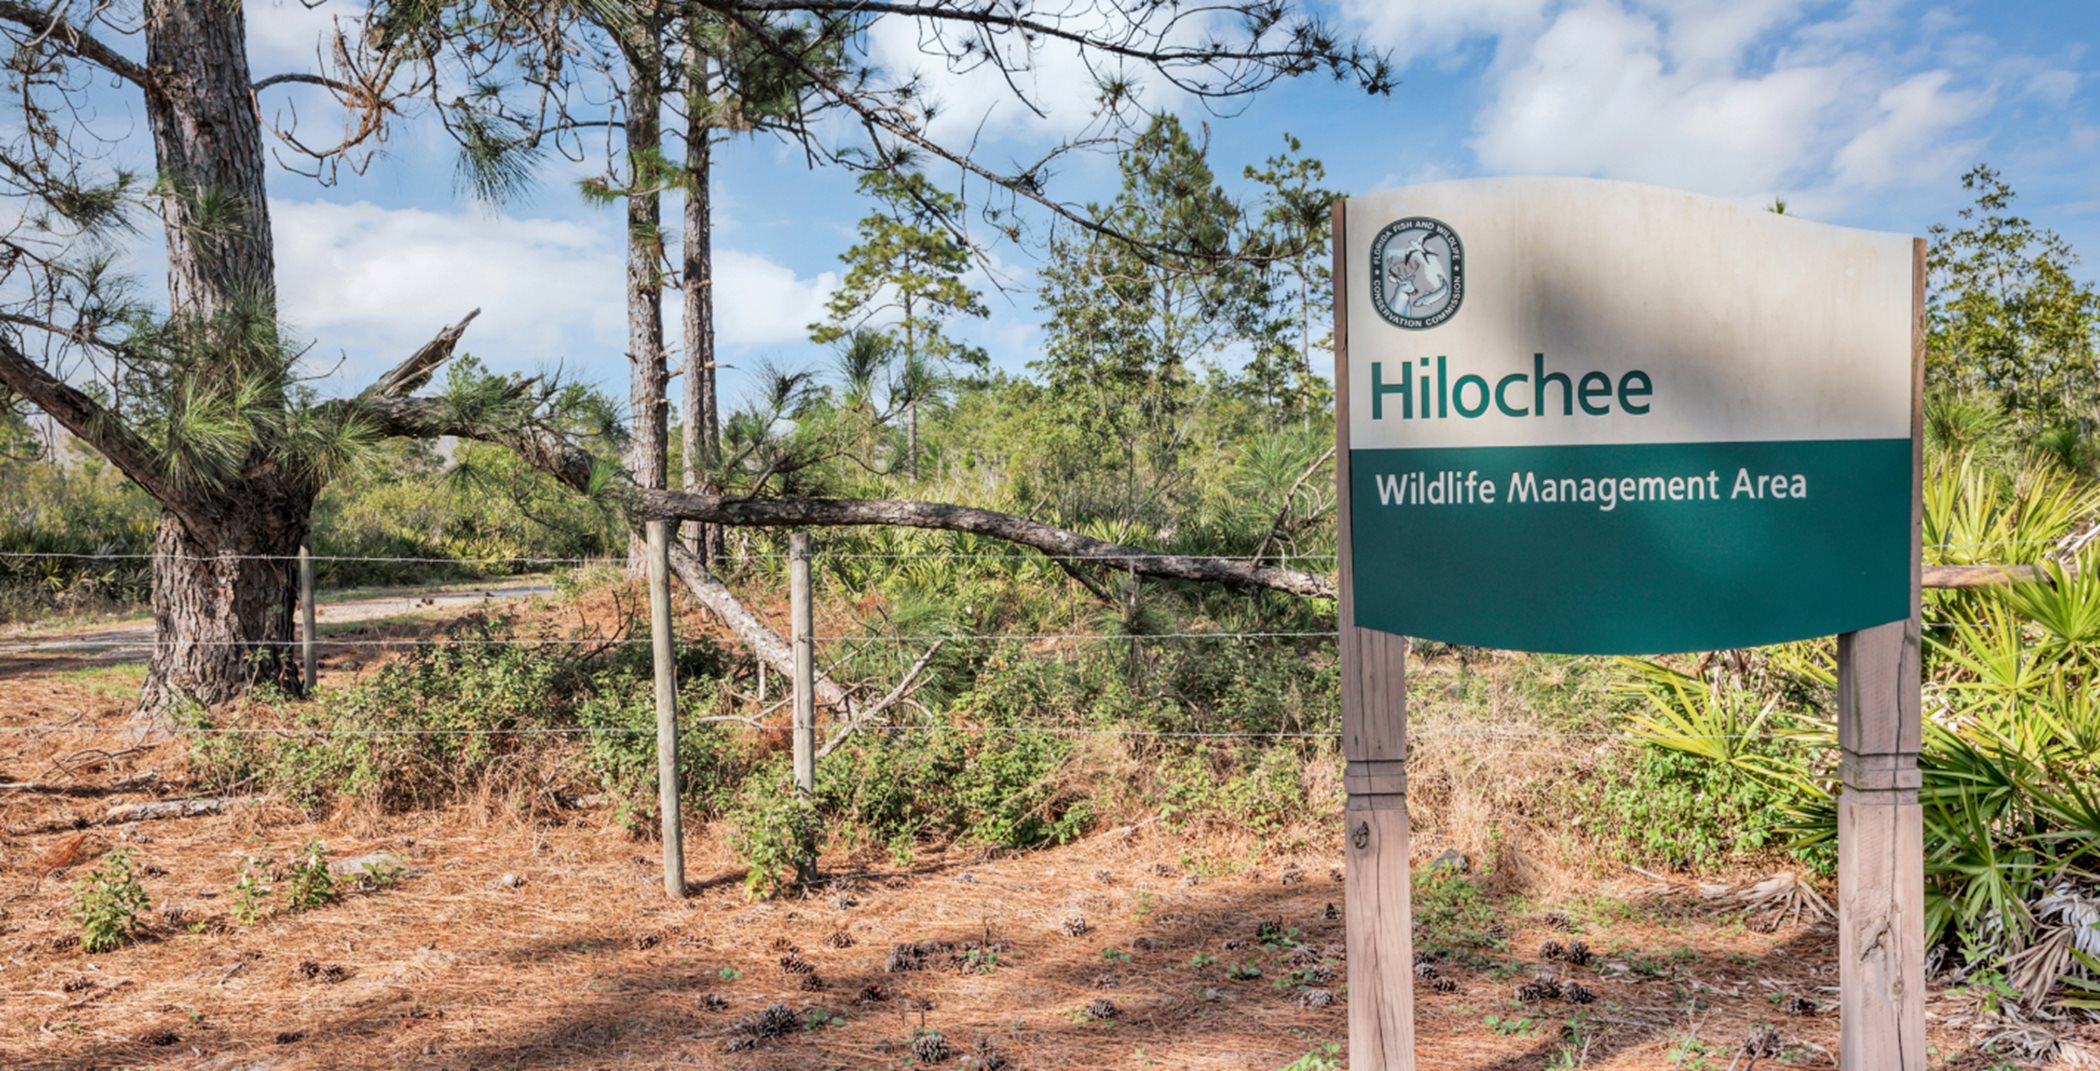 Hilochee Wildlife Management Area